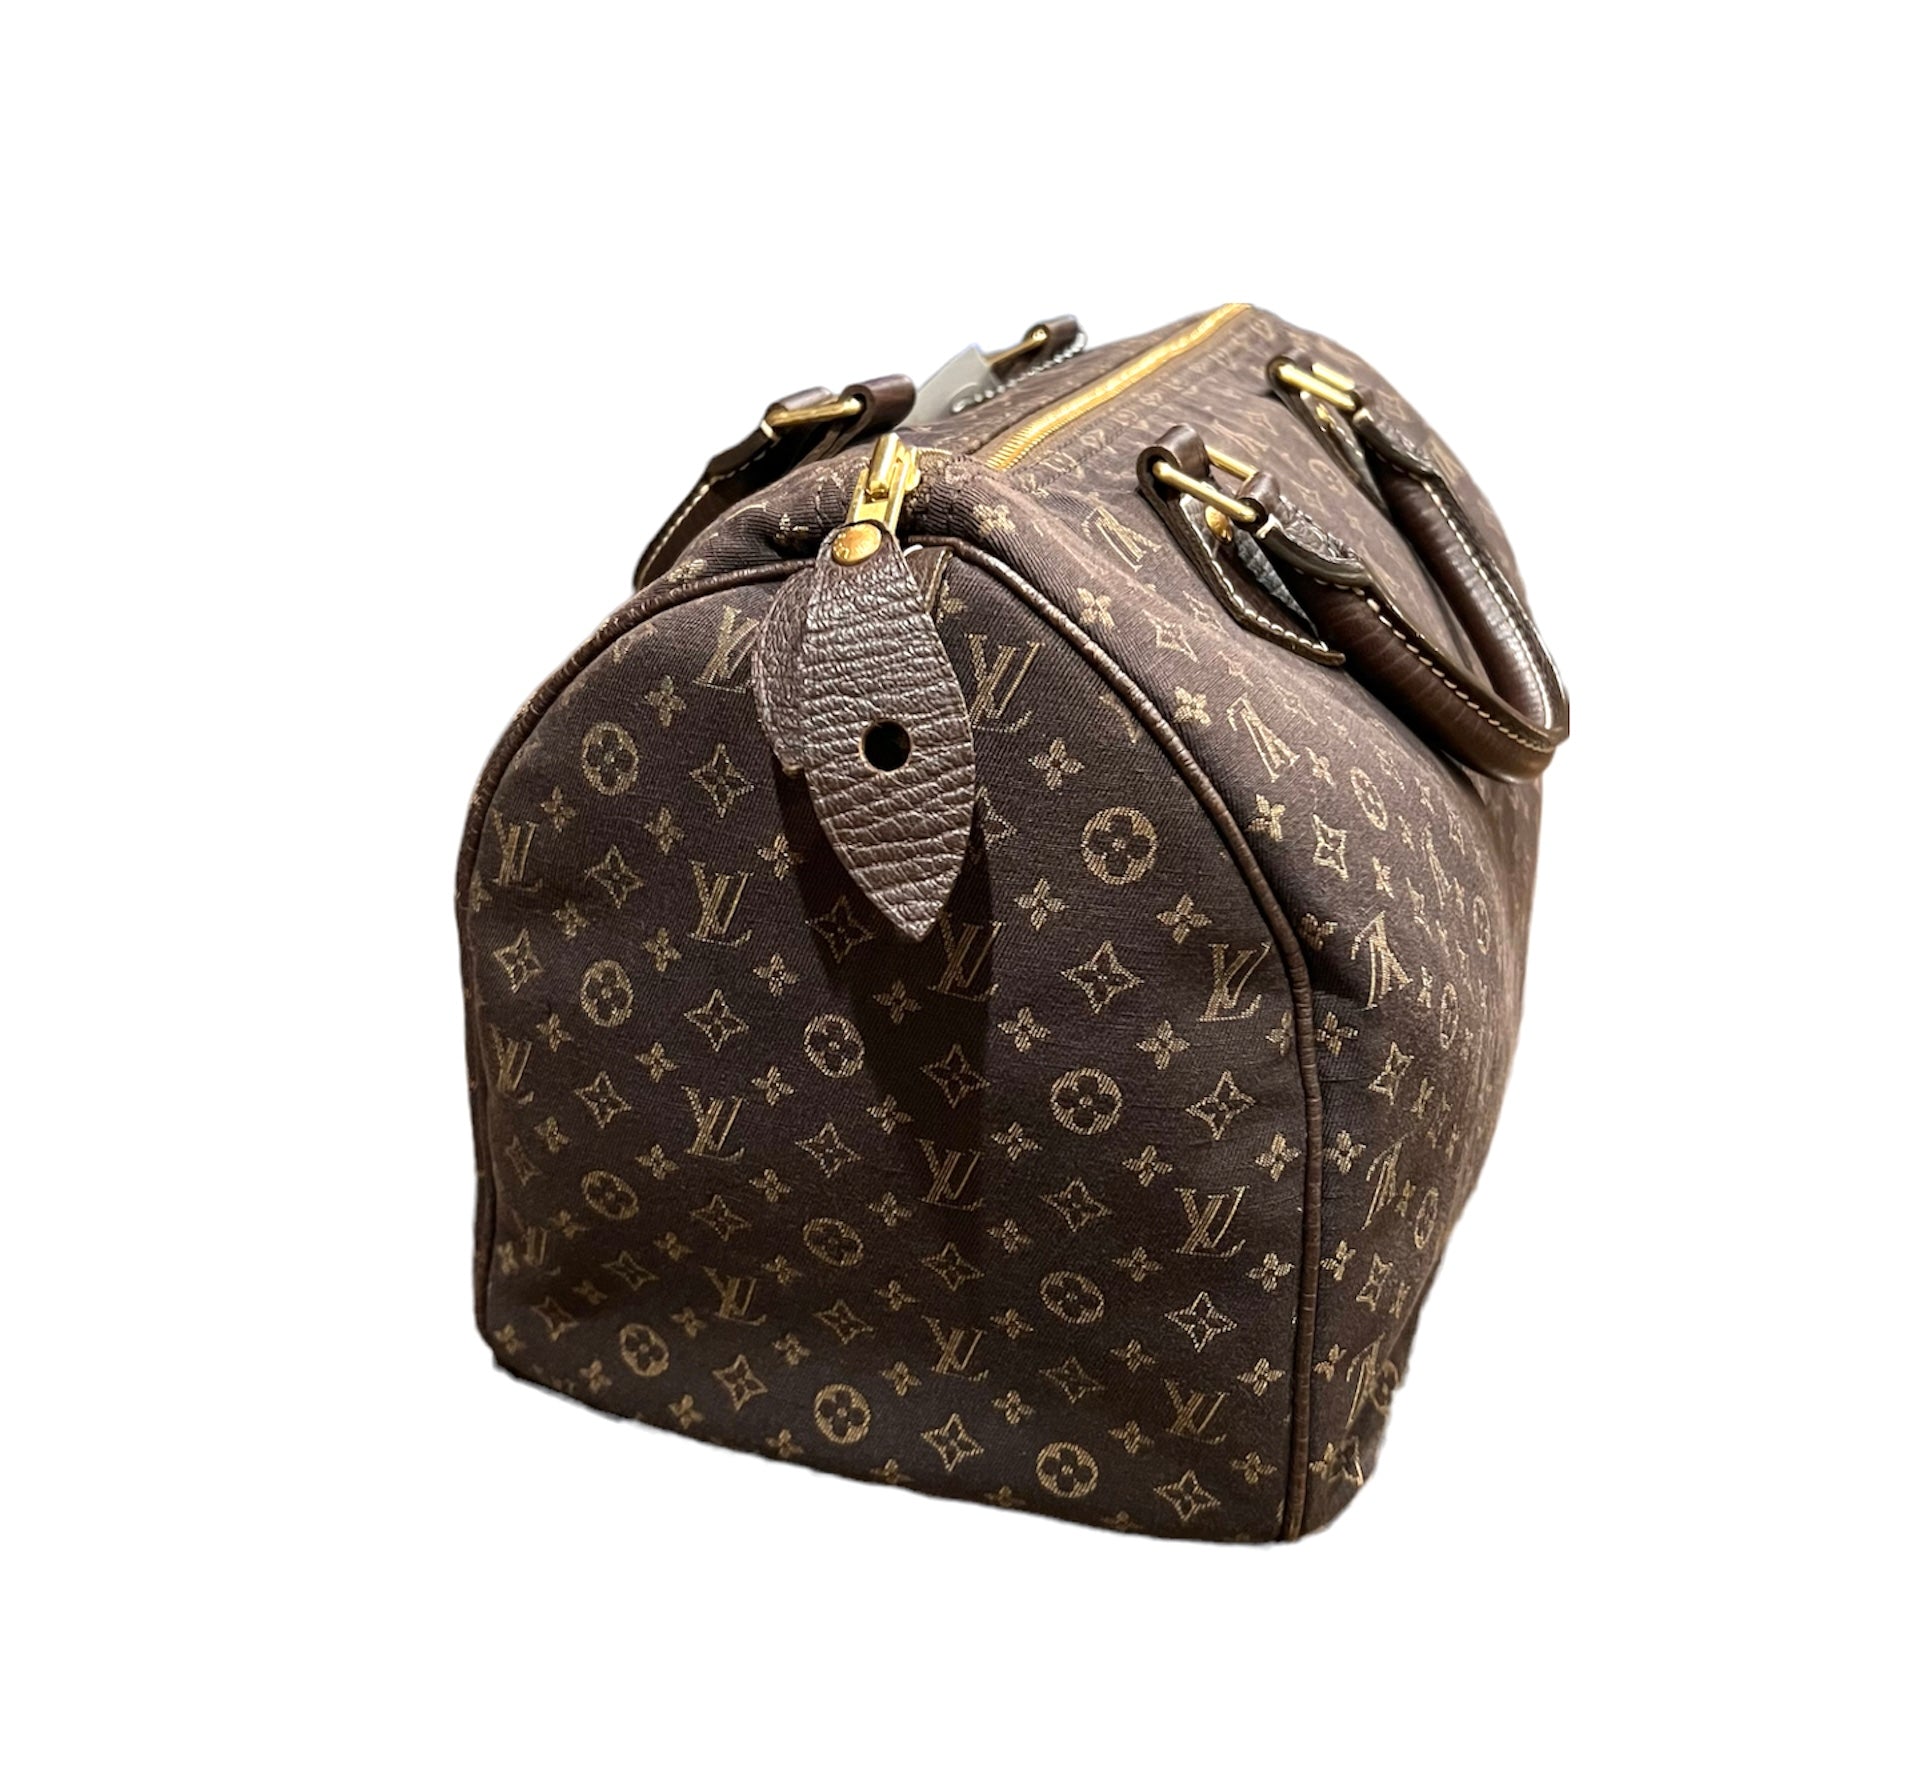 Louis Vuitton Papillon 30 handbag side backpack handbag with gold